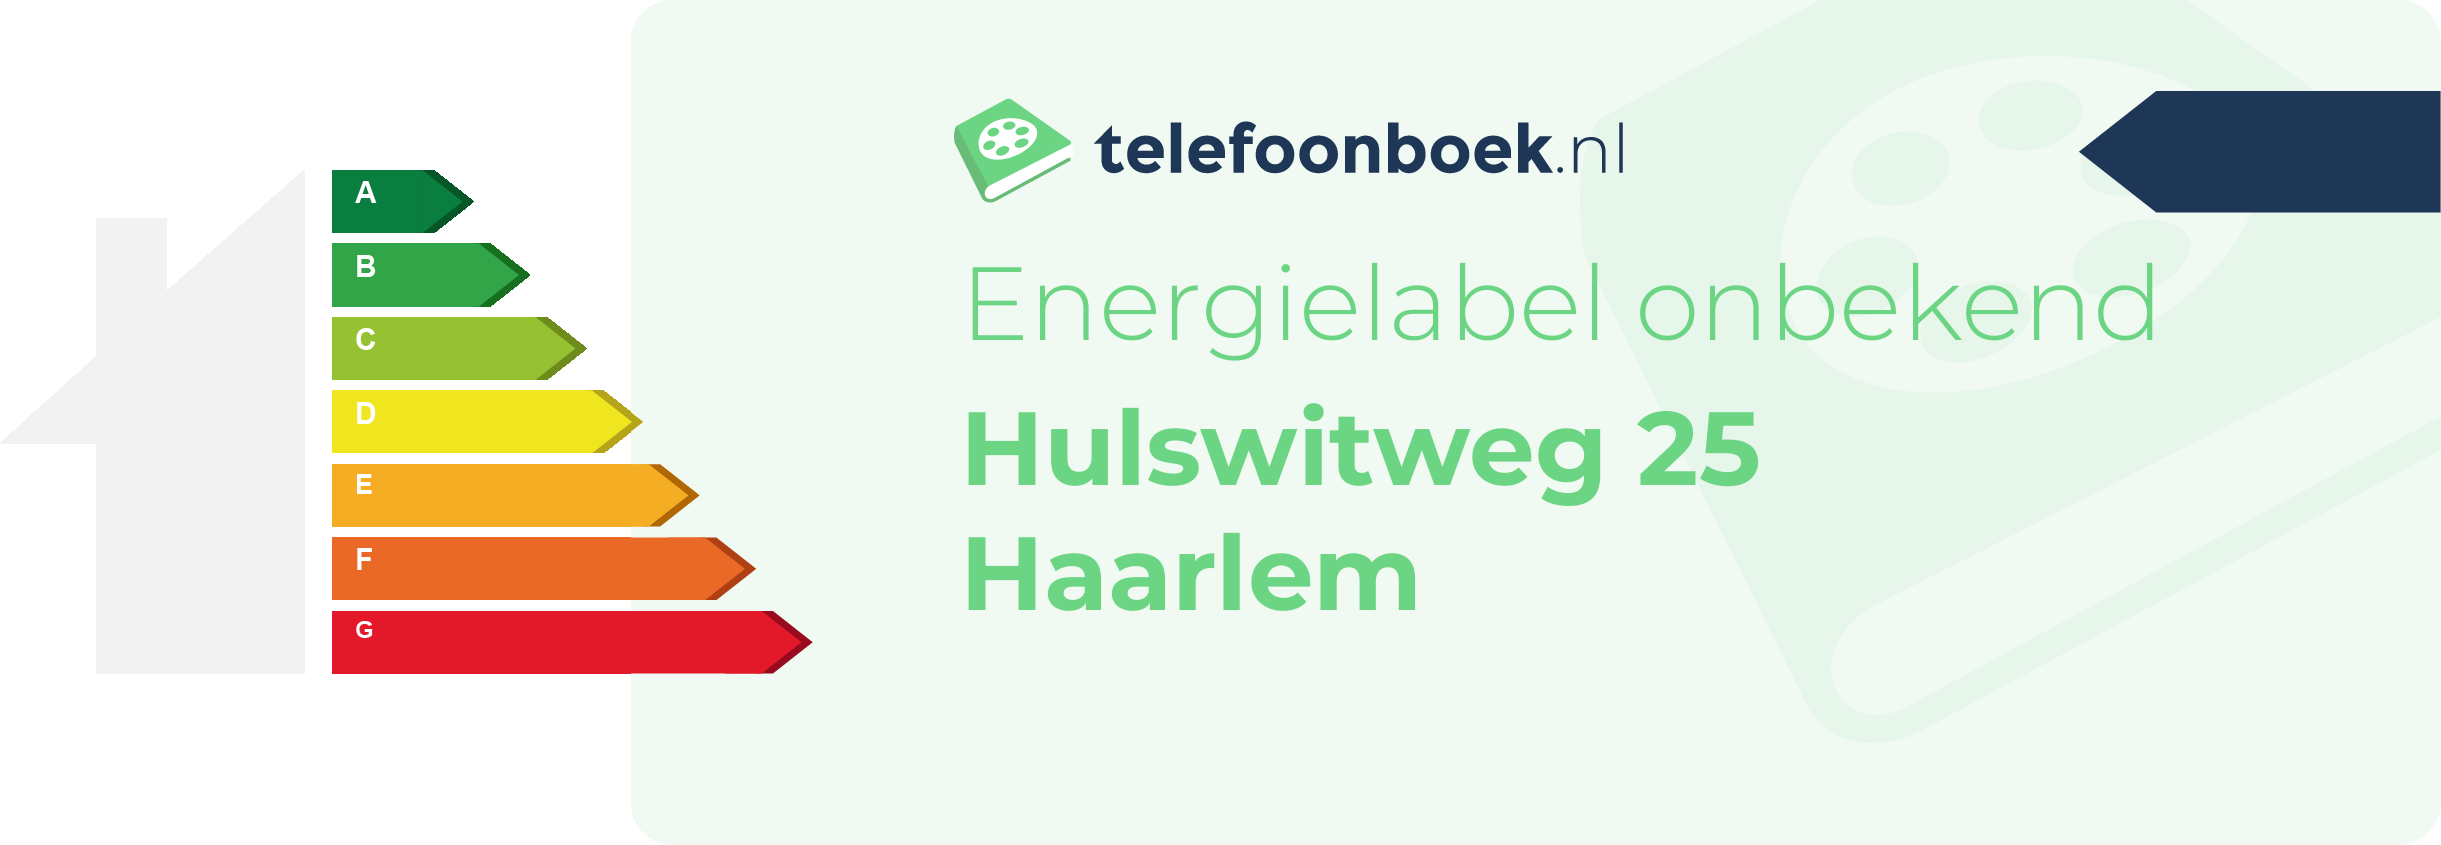 Energielabel Hulswitweg 25 Haarlem